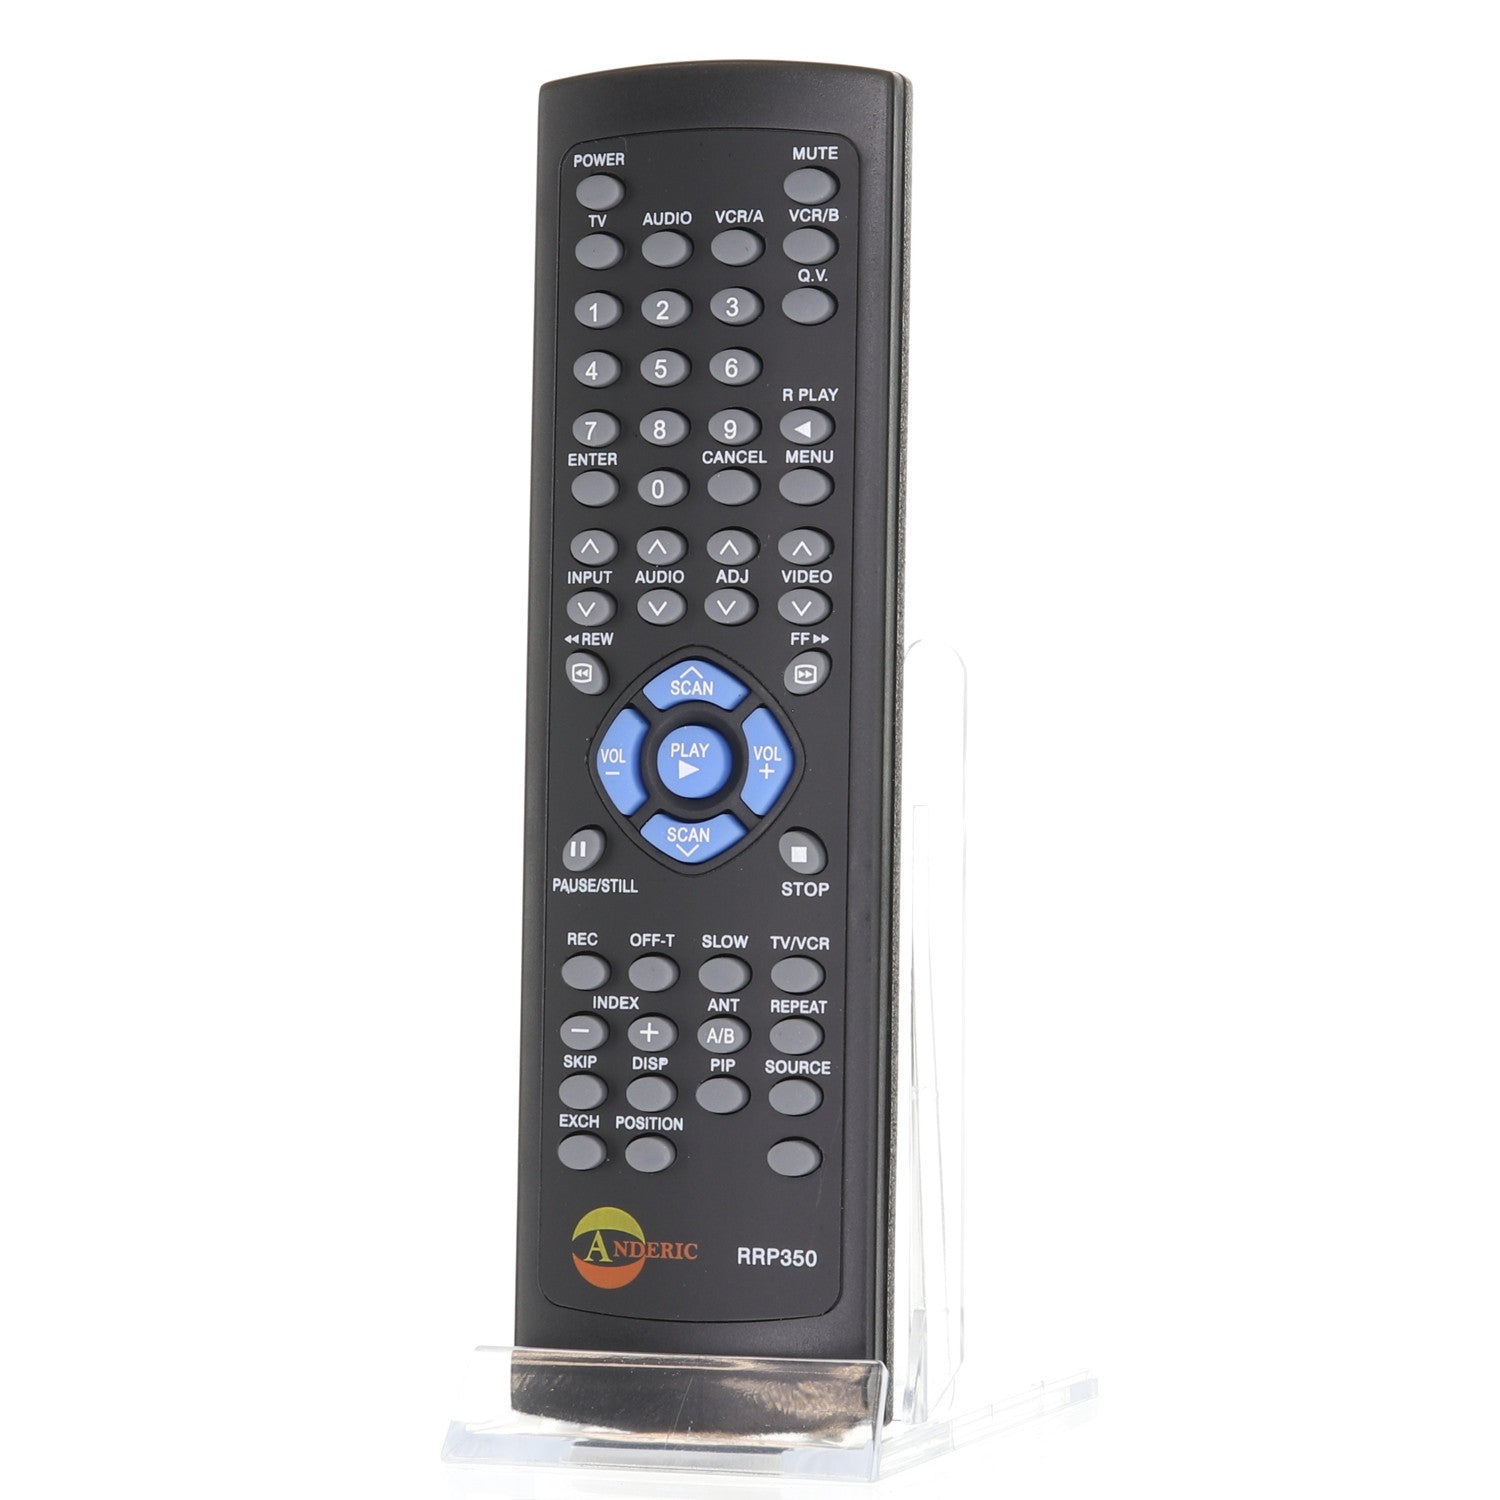 RRP350 Remote Control for Mitsubishi® TVs